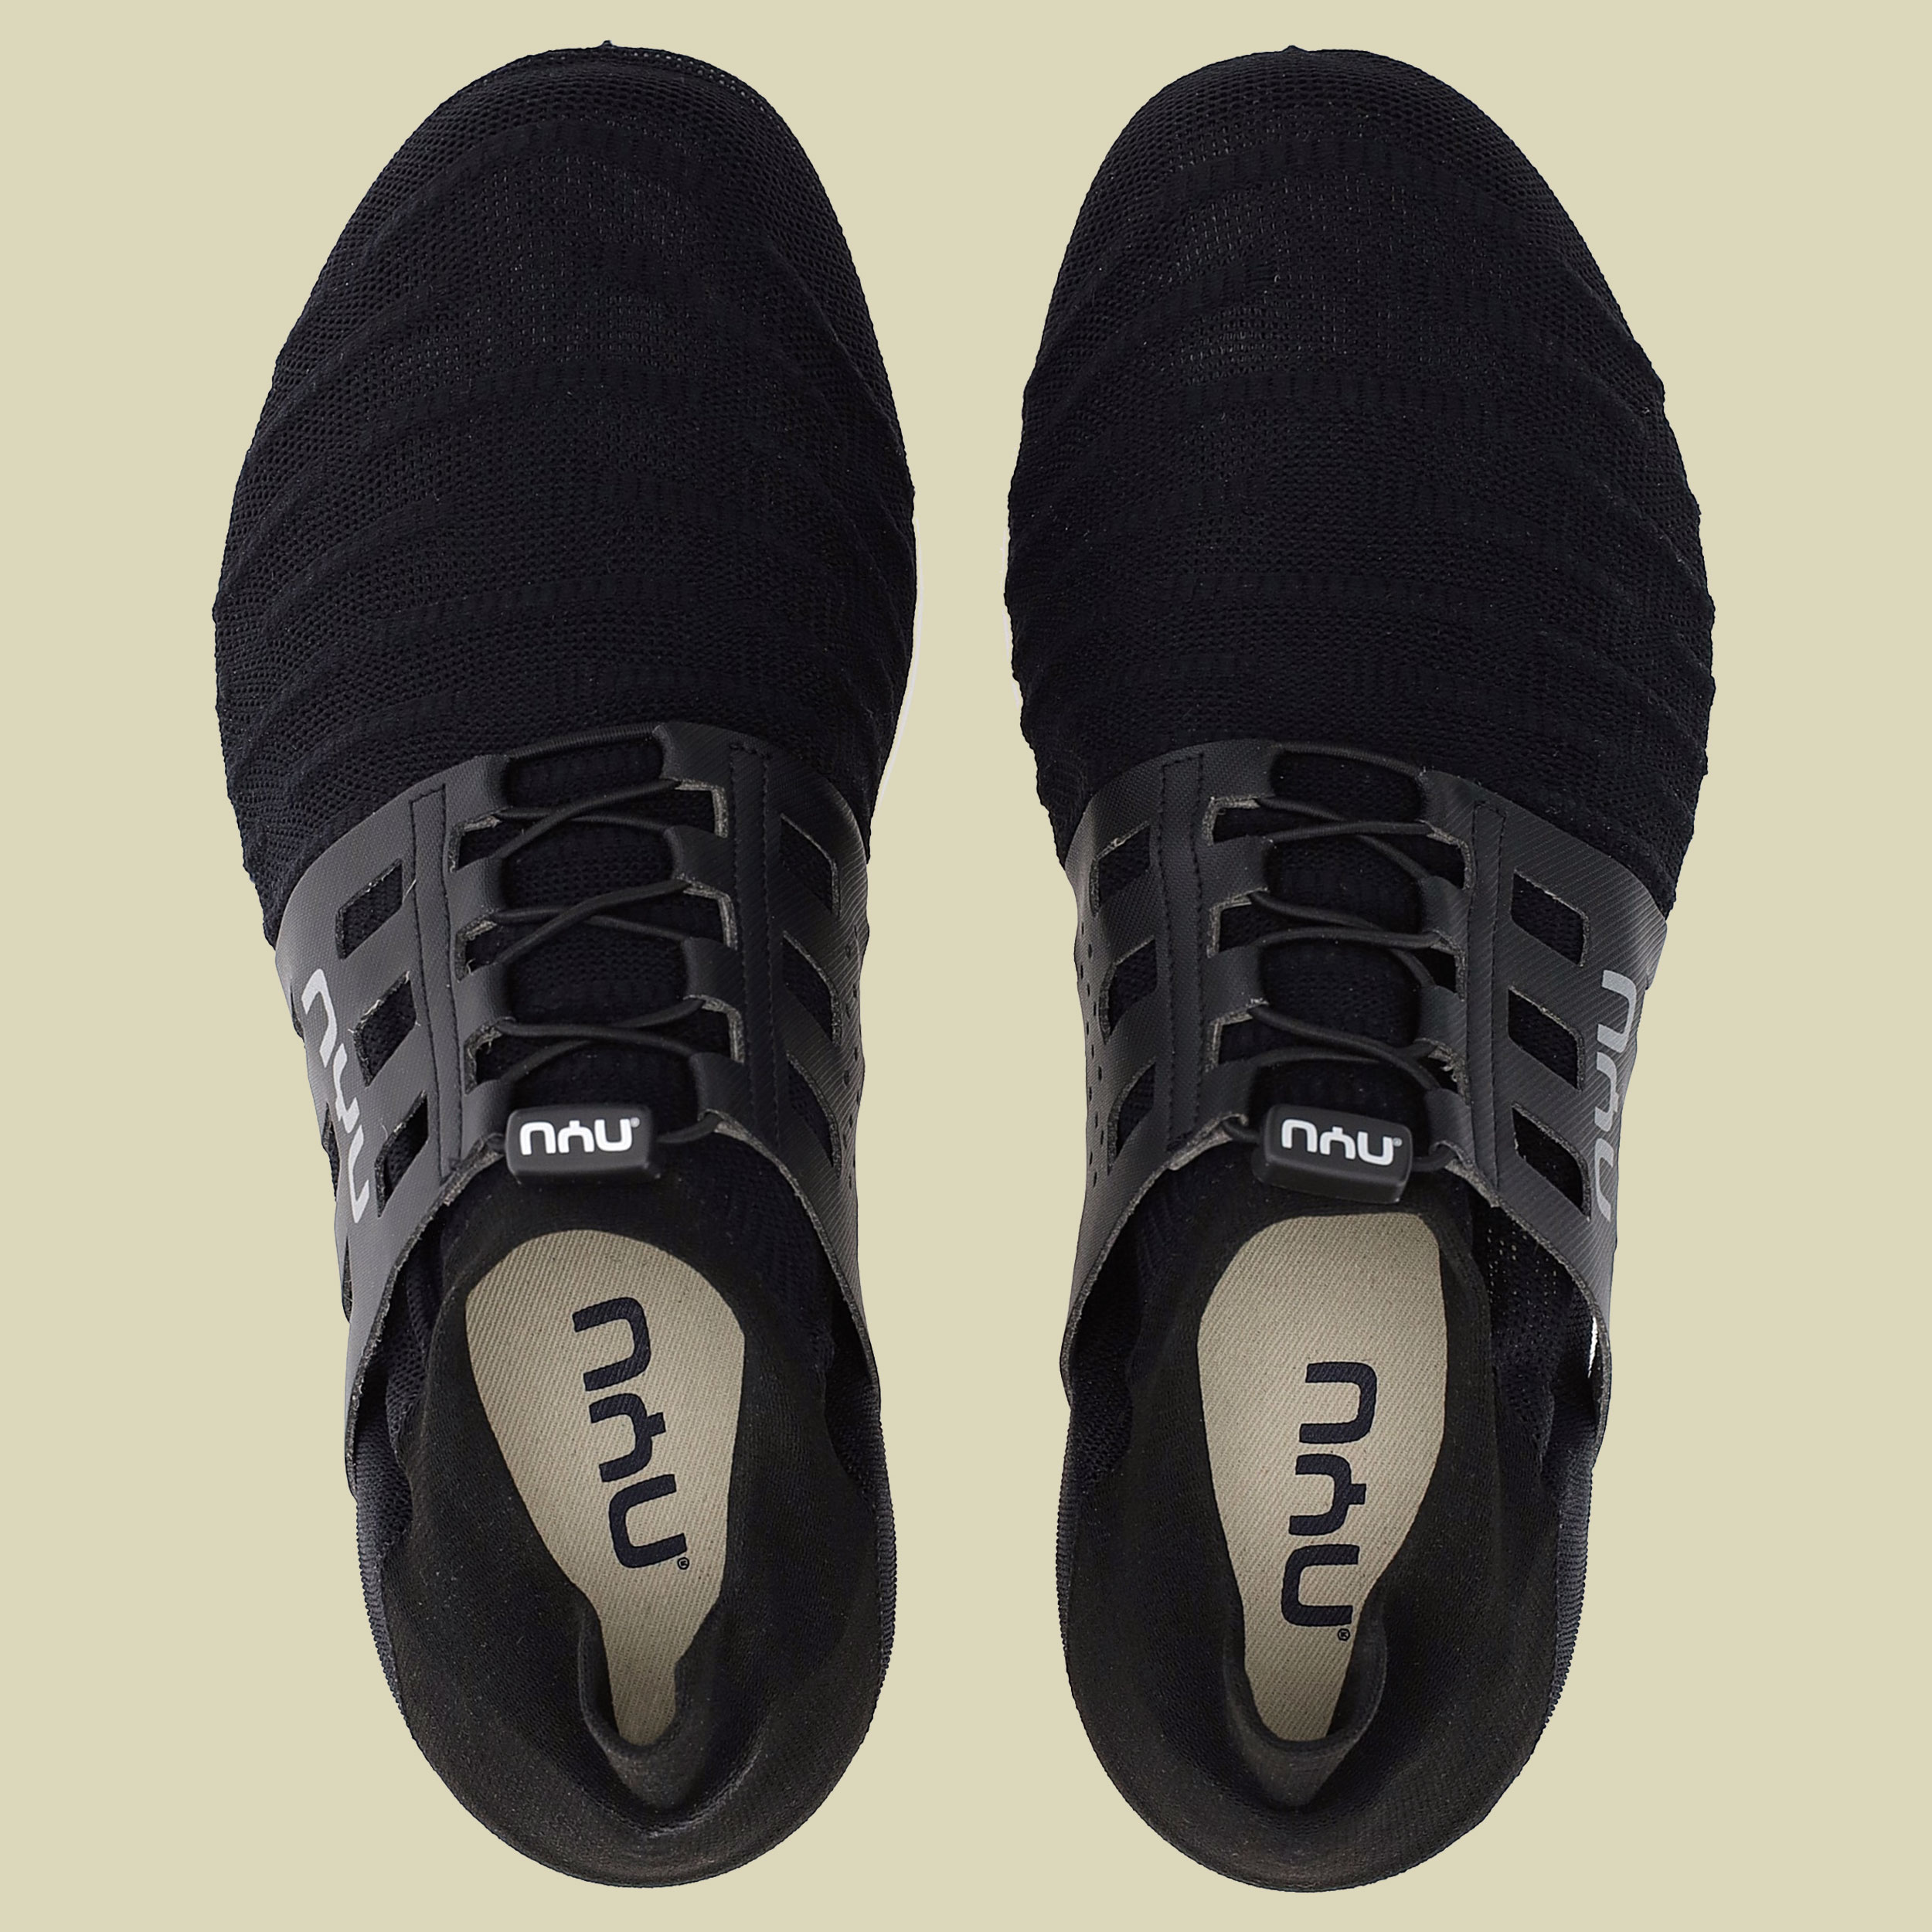 3D Ribs Tune Shoes Women Größe 39 Farbe black/charcoal